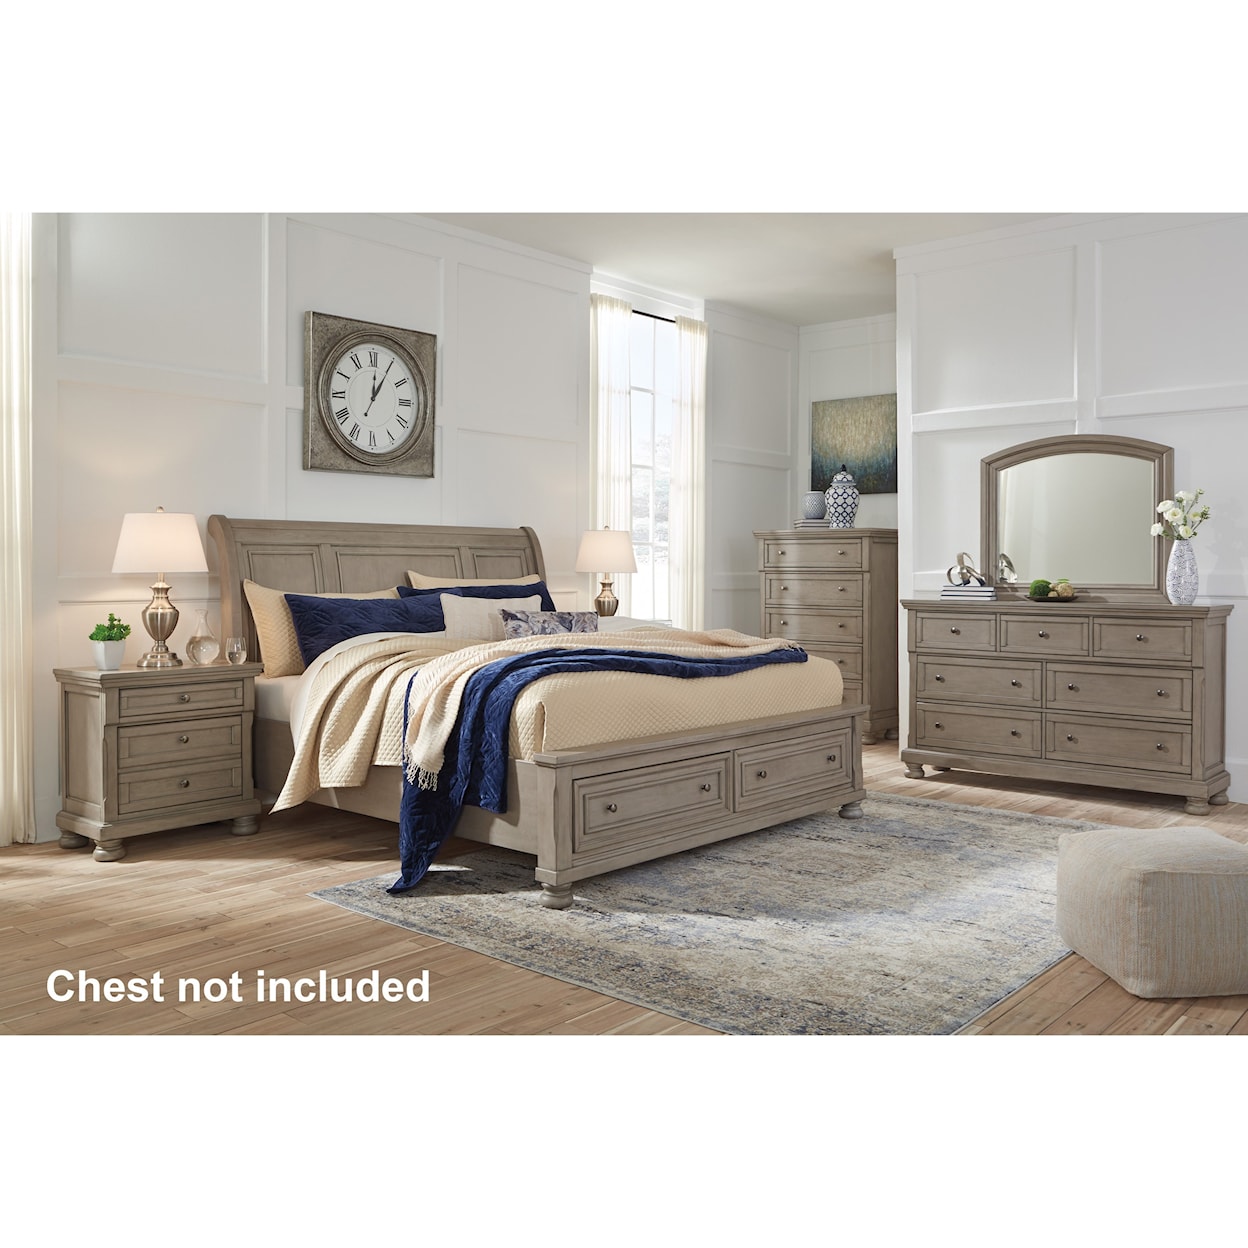 Ashley Furniture Signature Design Lettner California King Bedroom Group